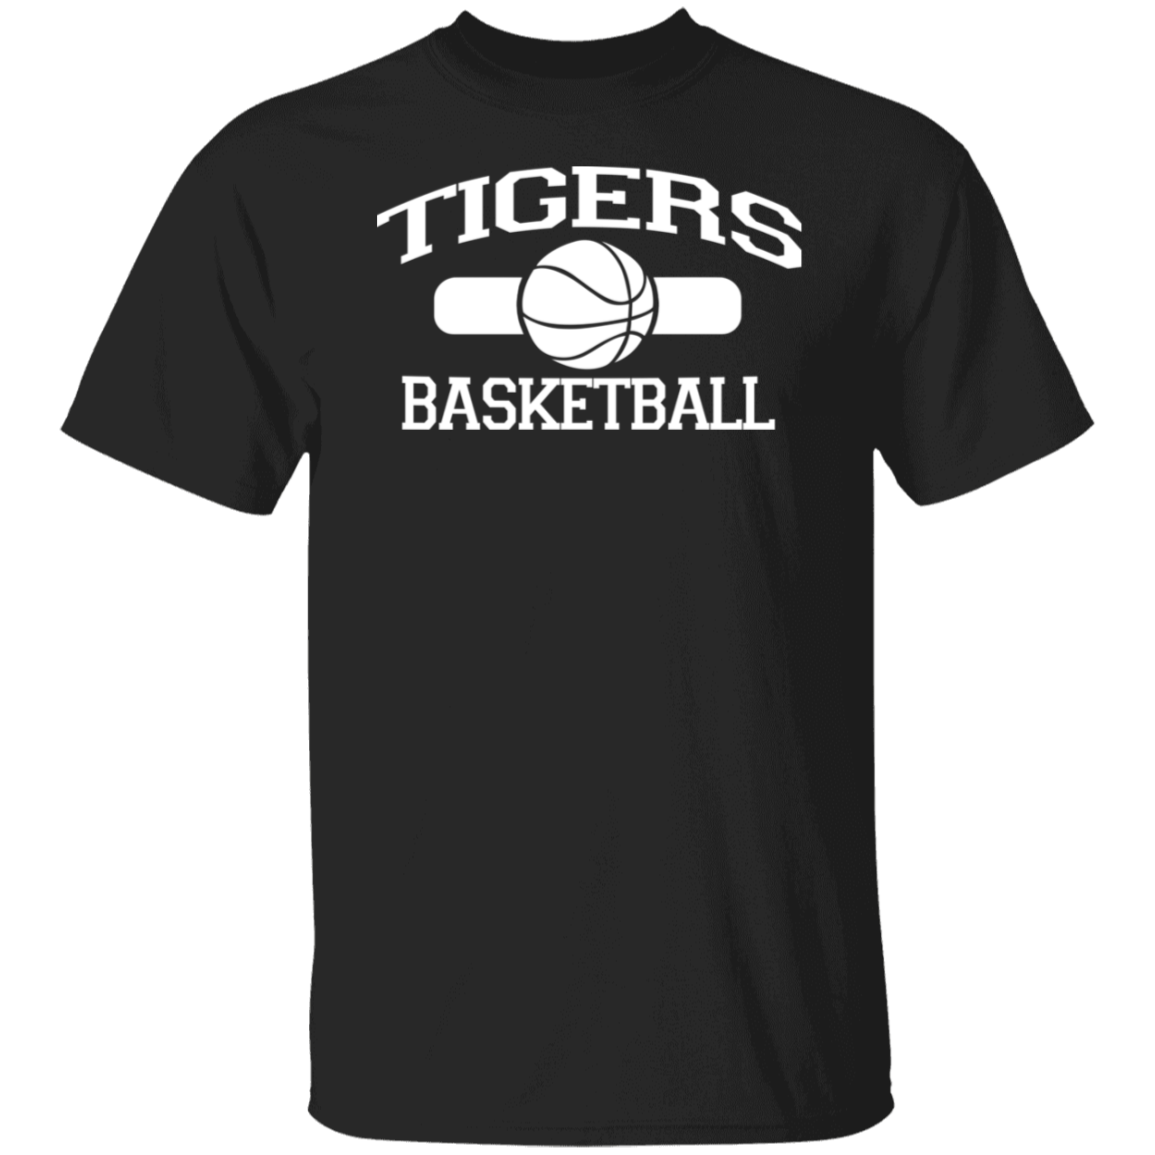 Tigers Basketball White Print T-Shirt